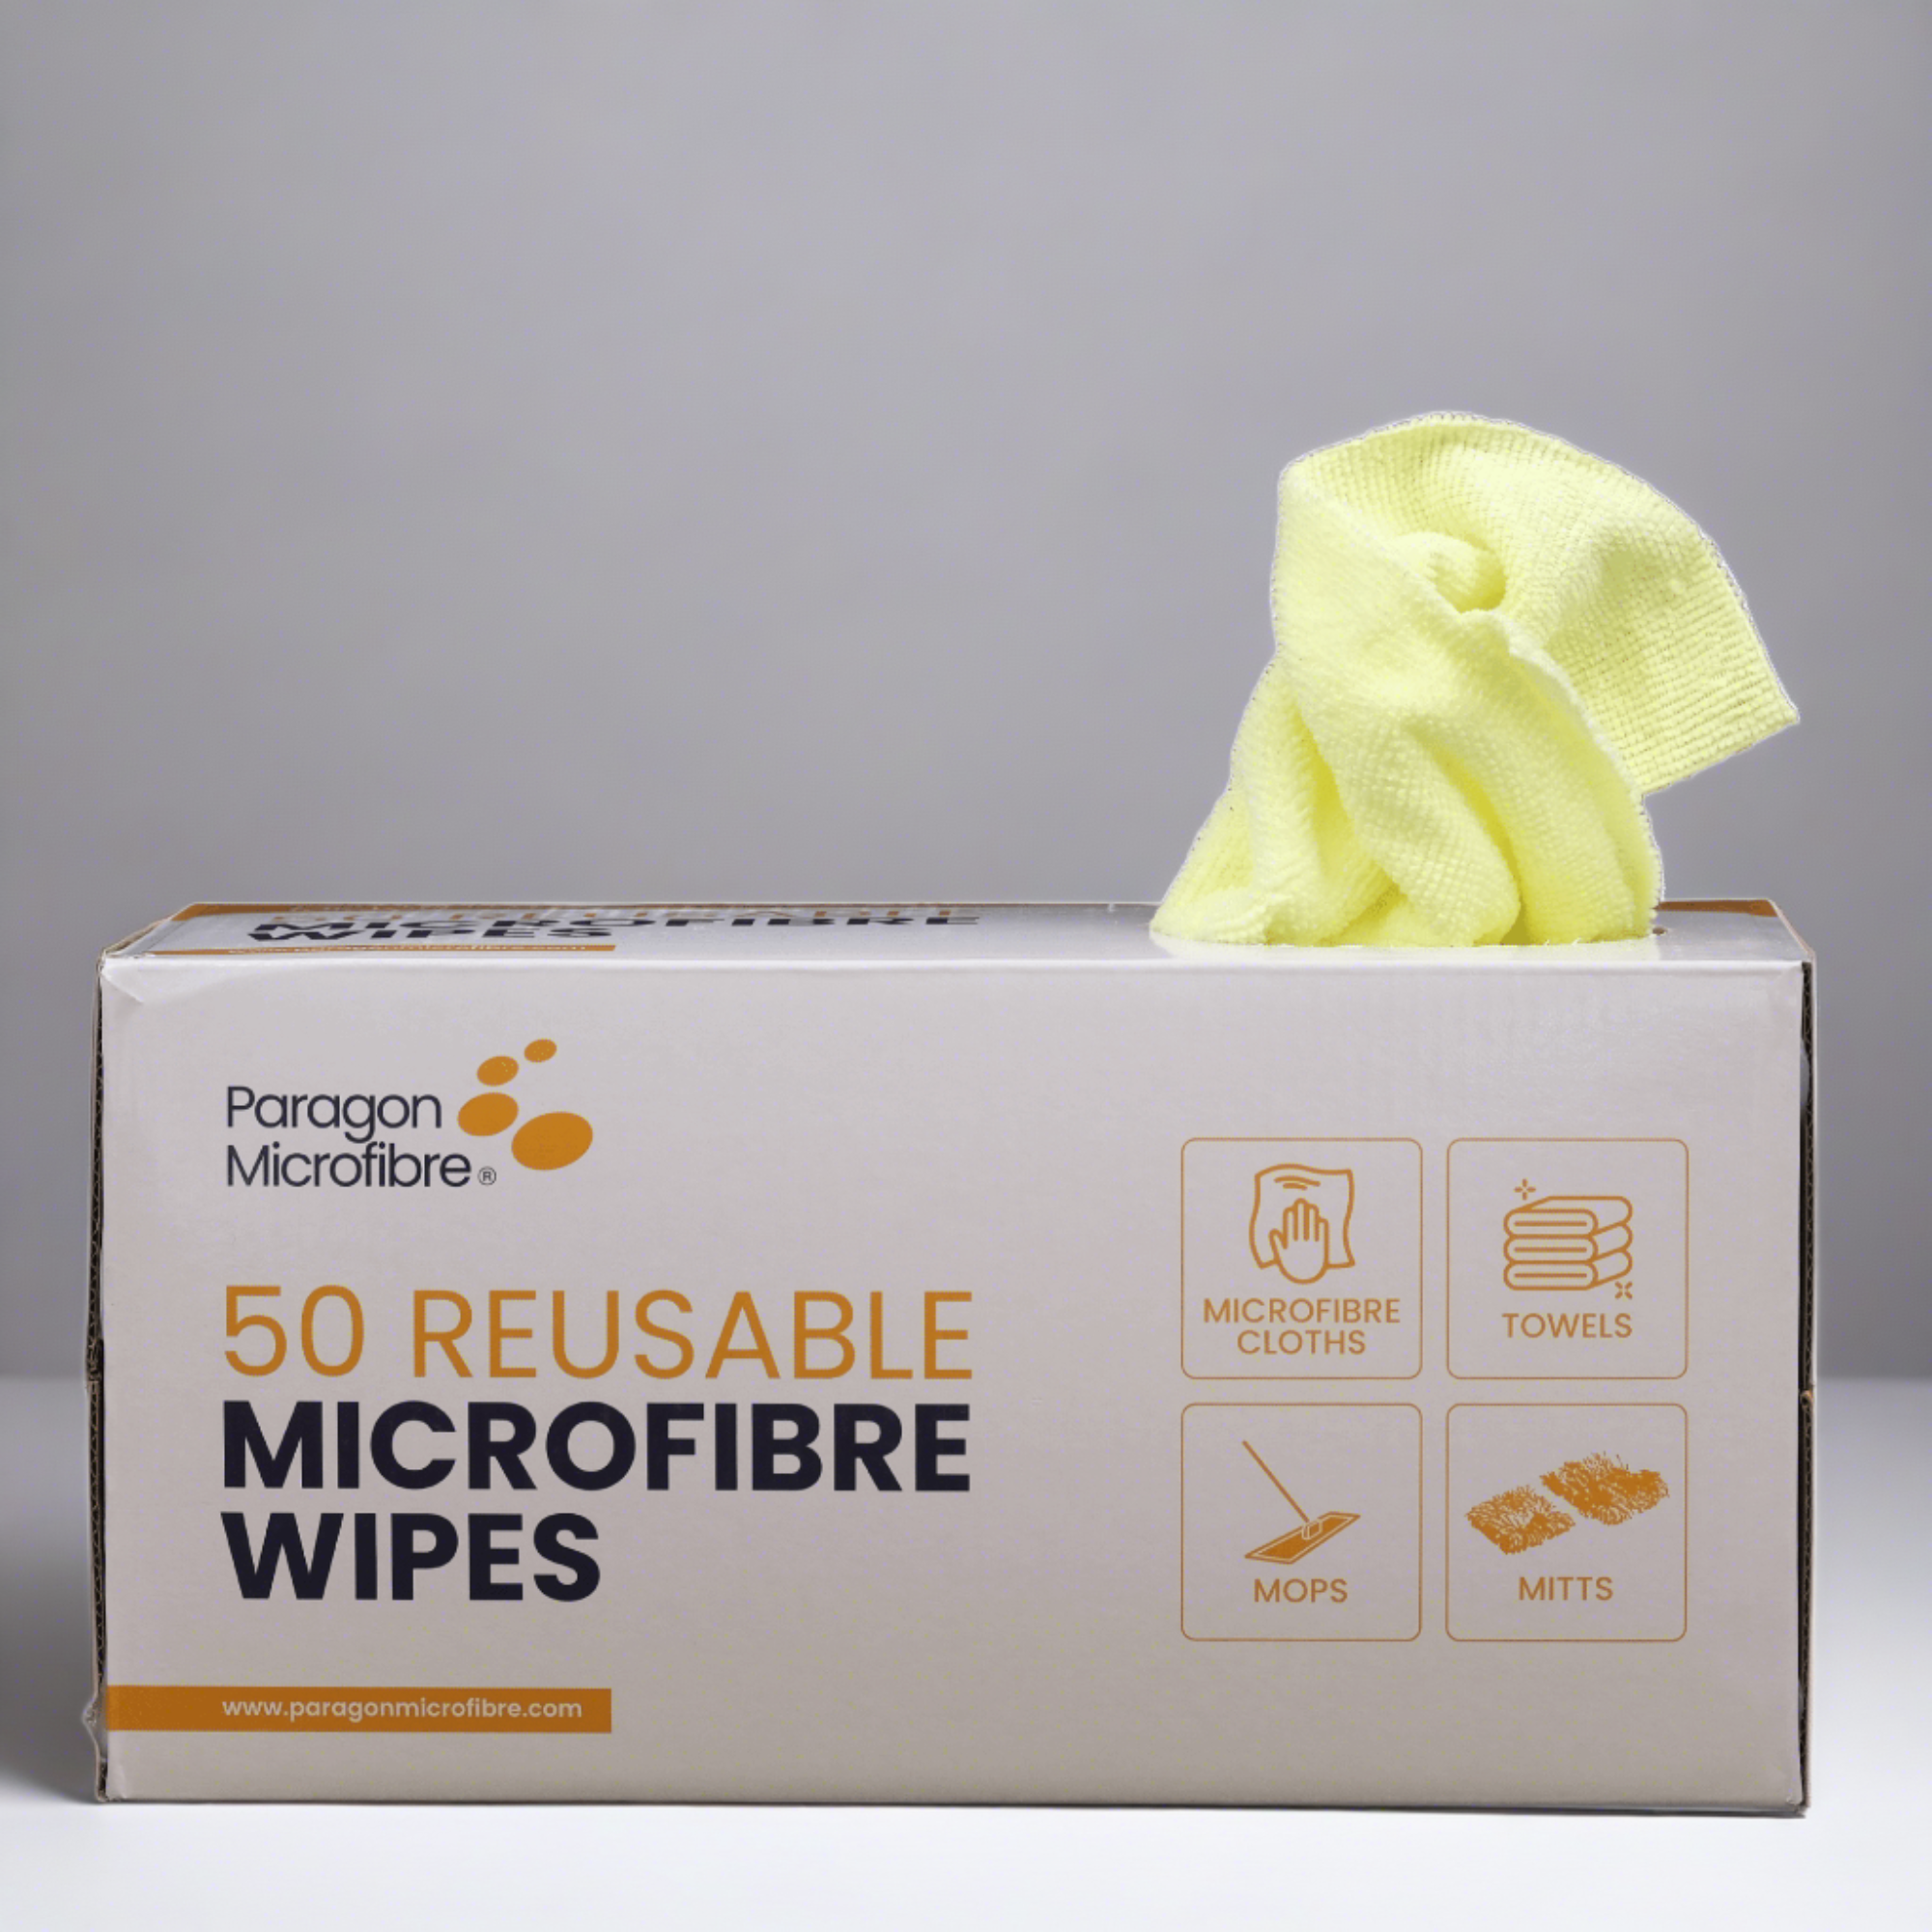 50 Reusable Microfibre Wipes